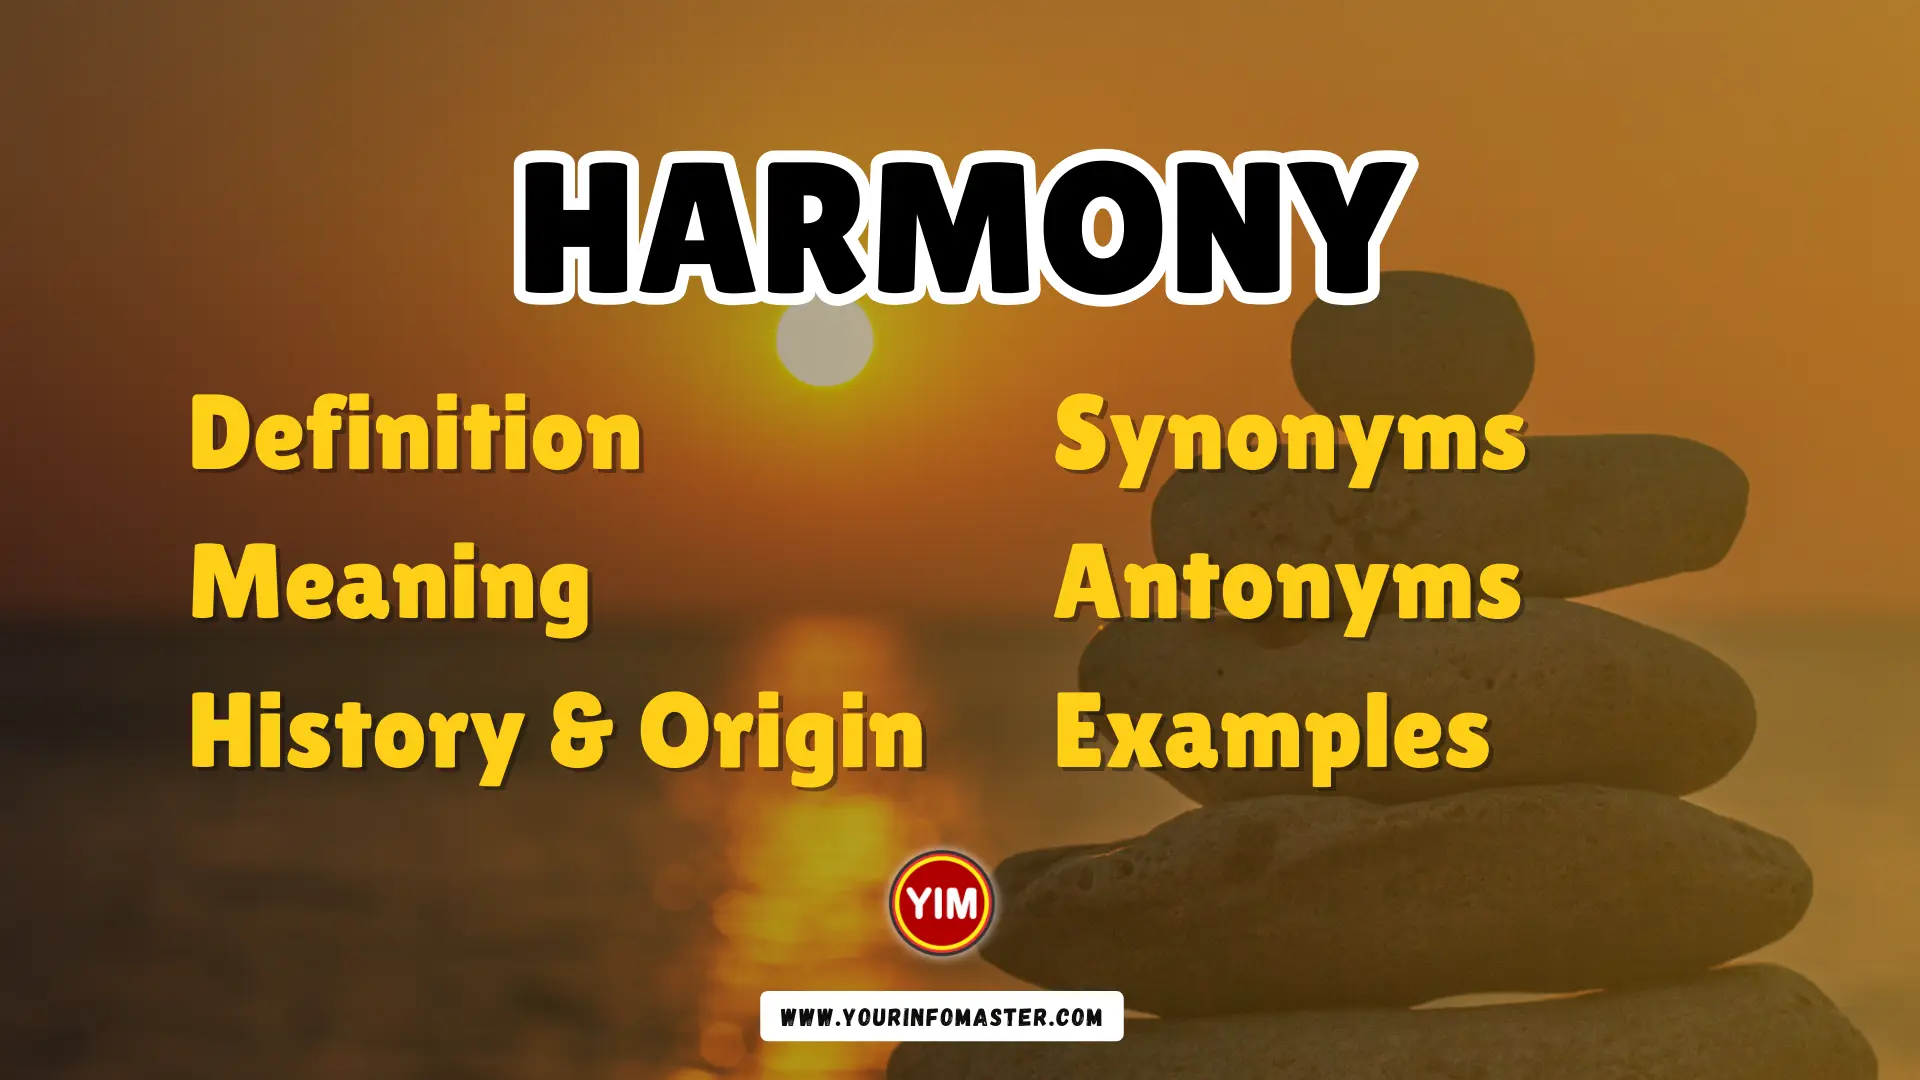 Harmony Synonyms, Antonyms, Example Sentences